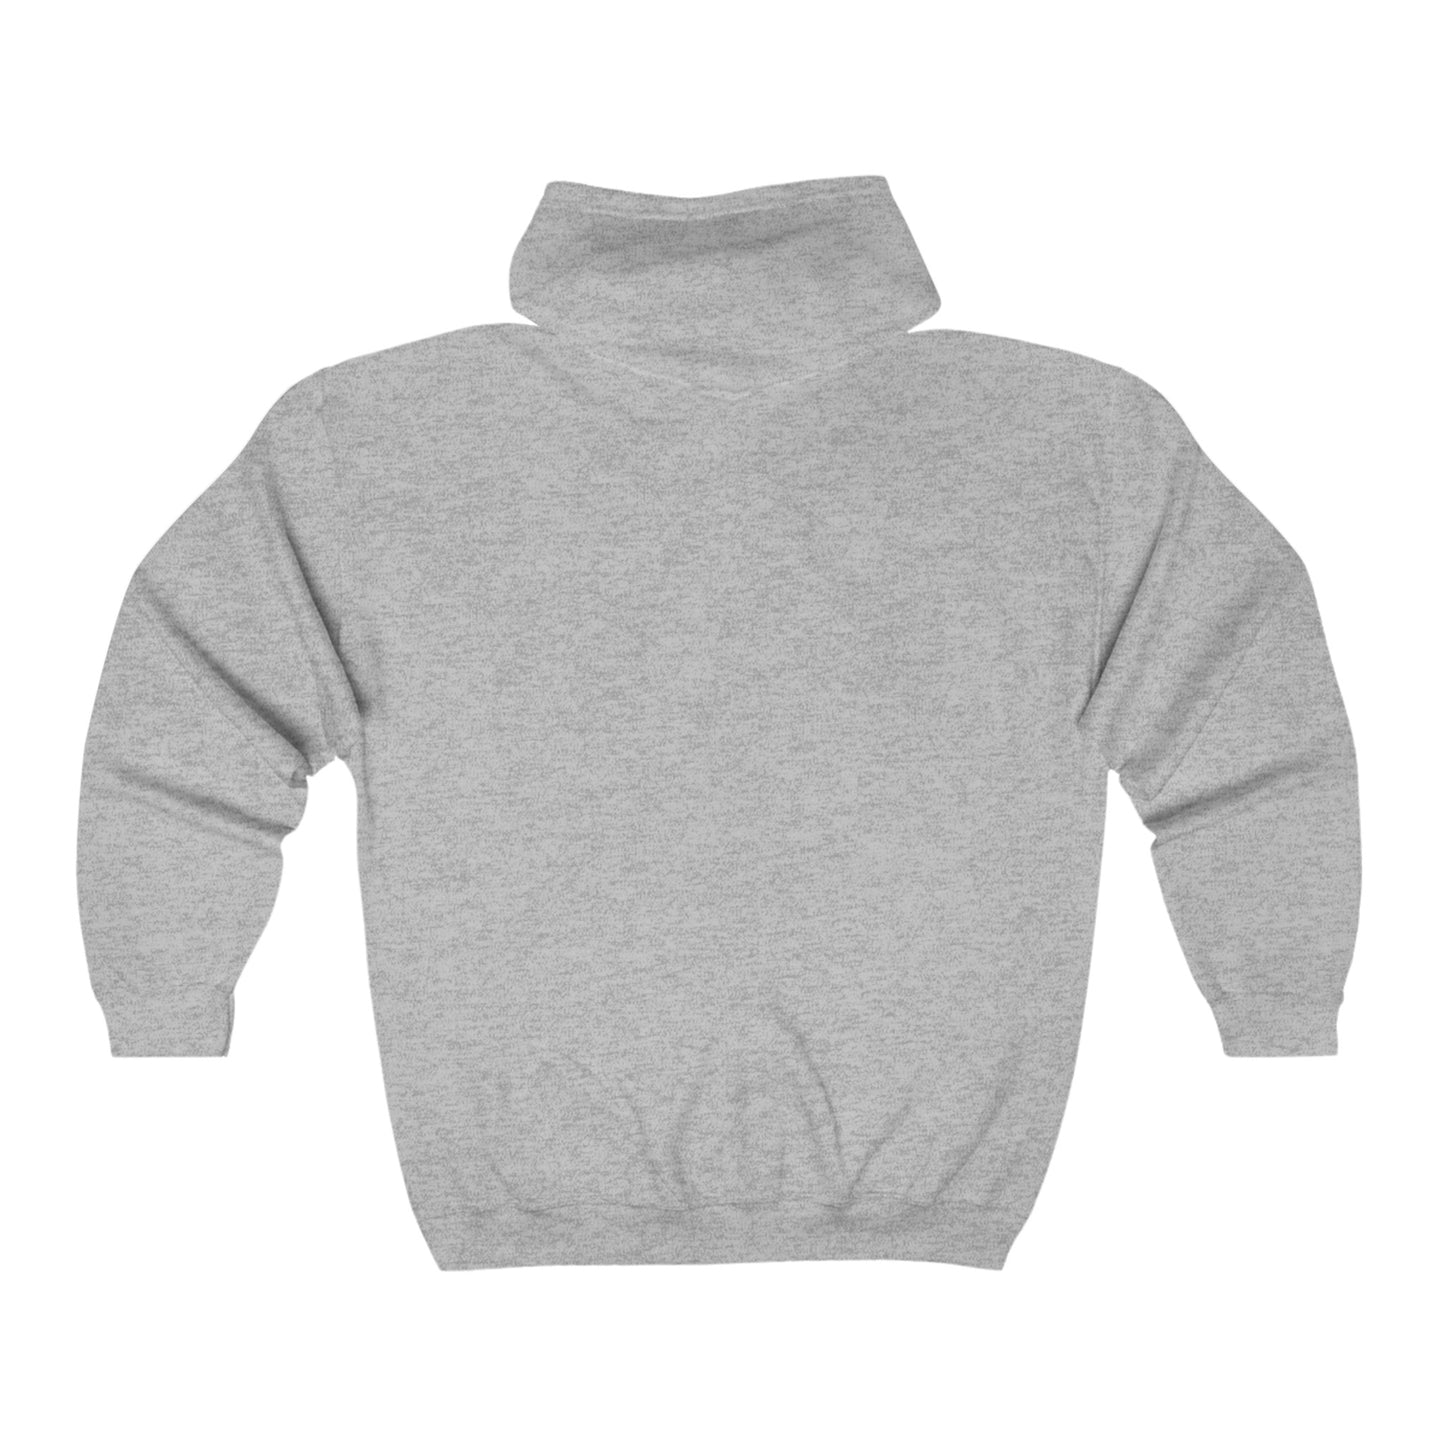 Stacked Logo (front) & Classic Tech Seal (back) - Men's Heavy Blend Full Zip Hooded Sweatshirt